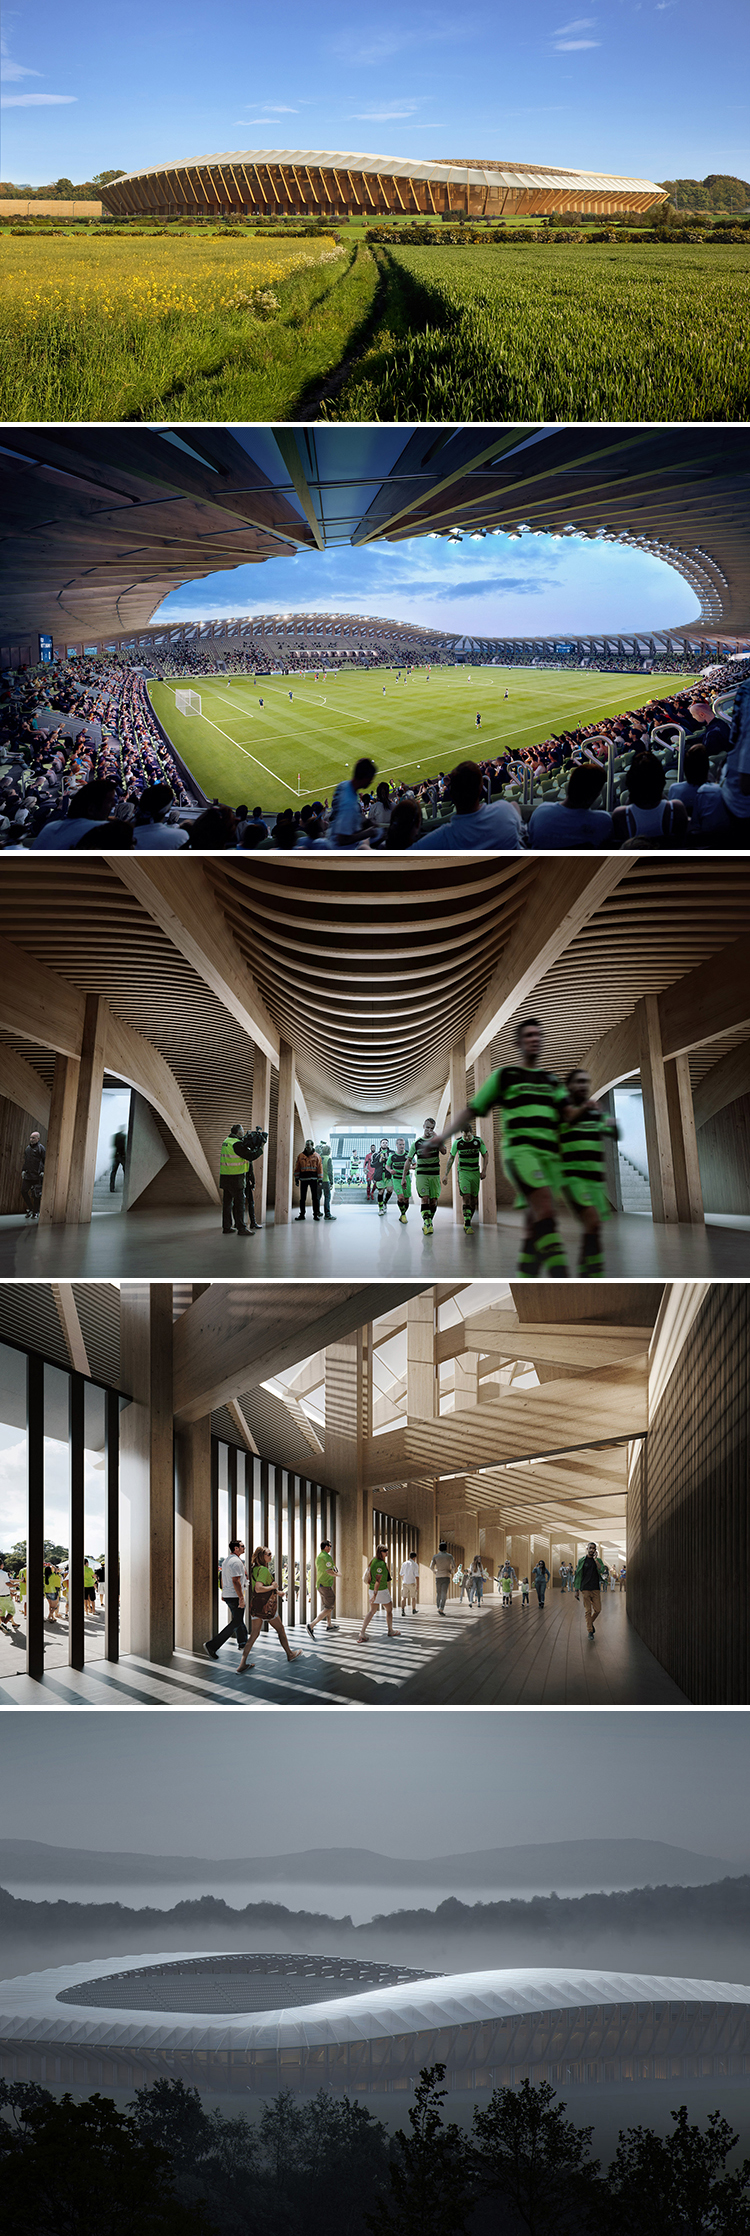 Figuras 10-14. Zaha Hadid architects, estadio de madera para los Forest Green Rovers.